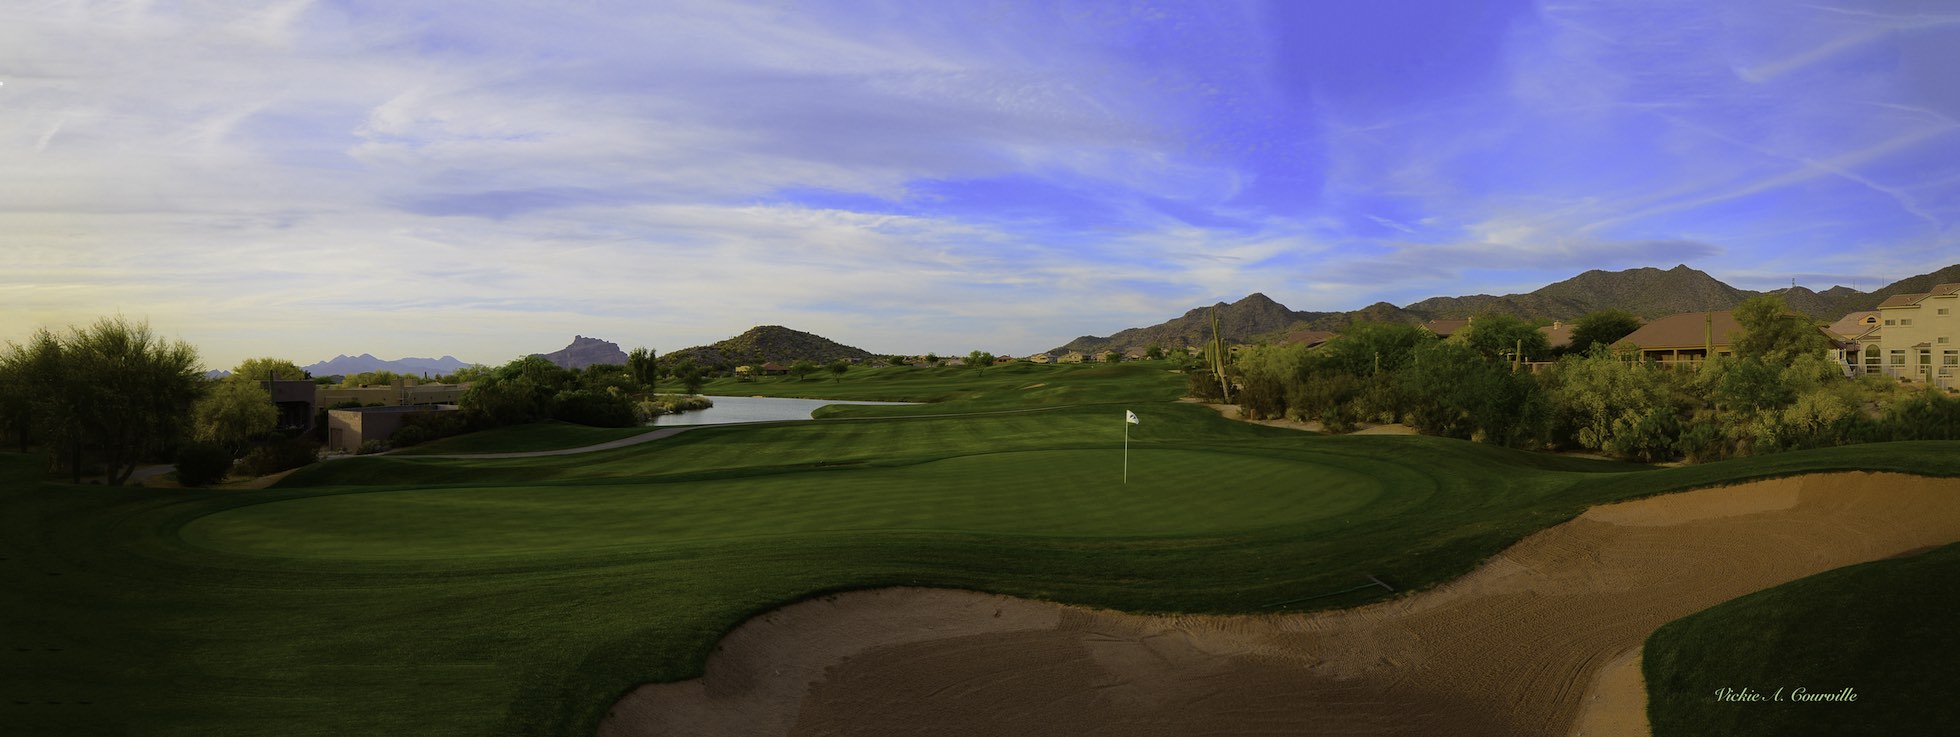 Aerial view of Las Sendas golf course